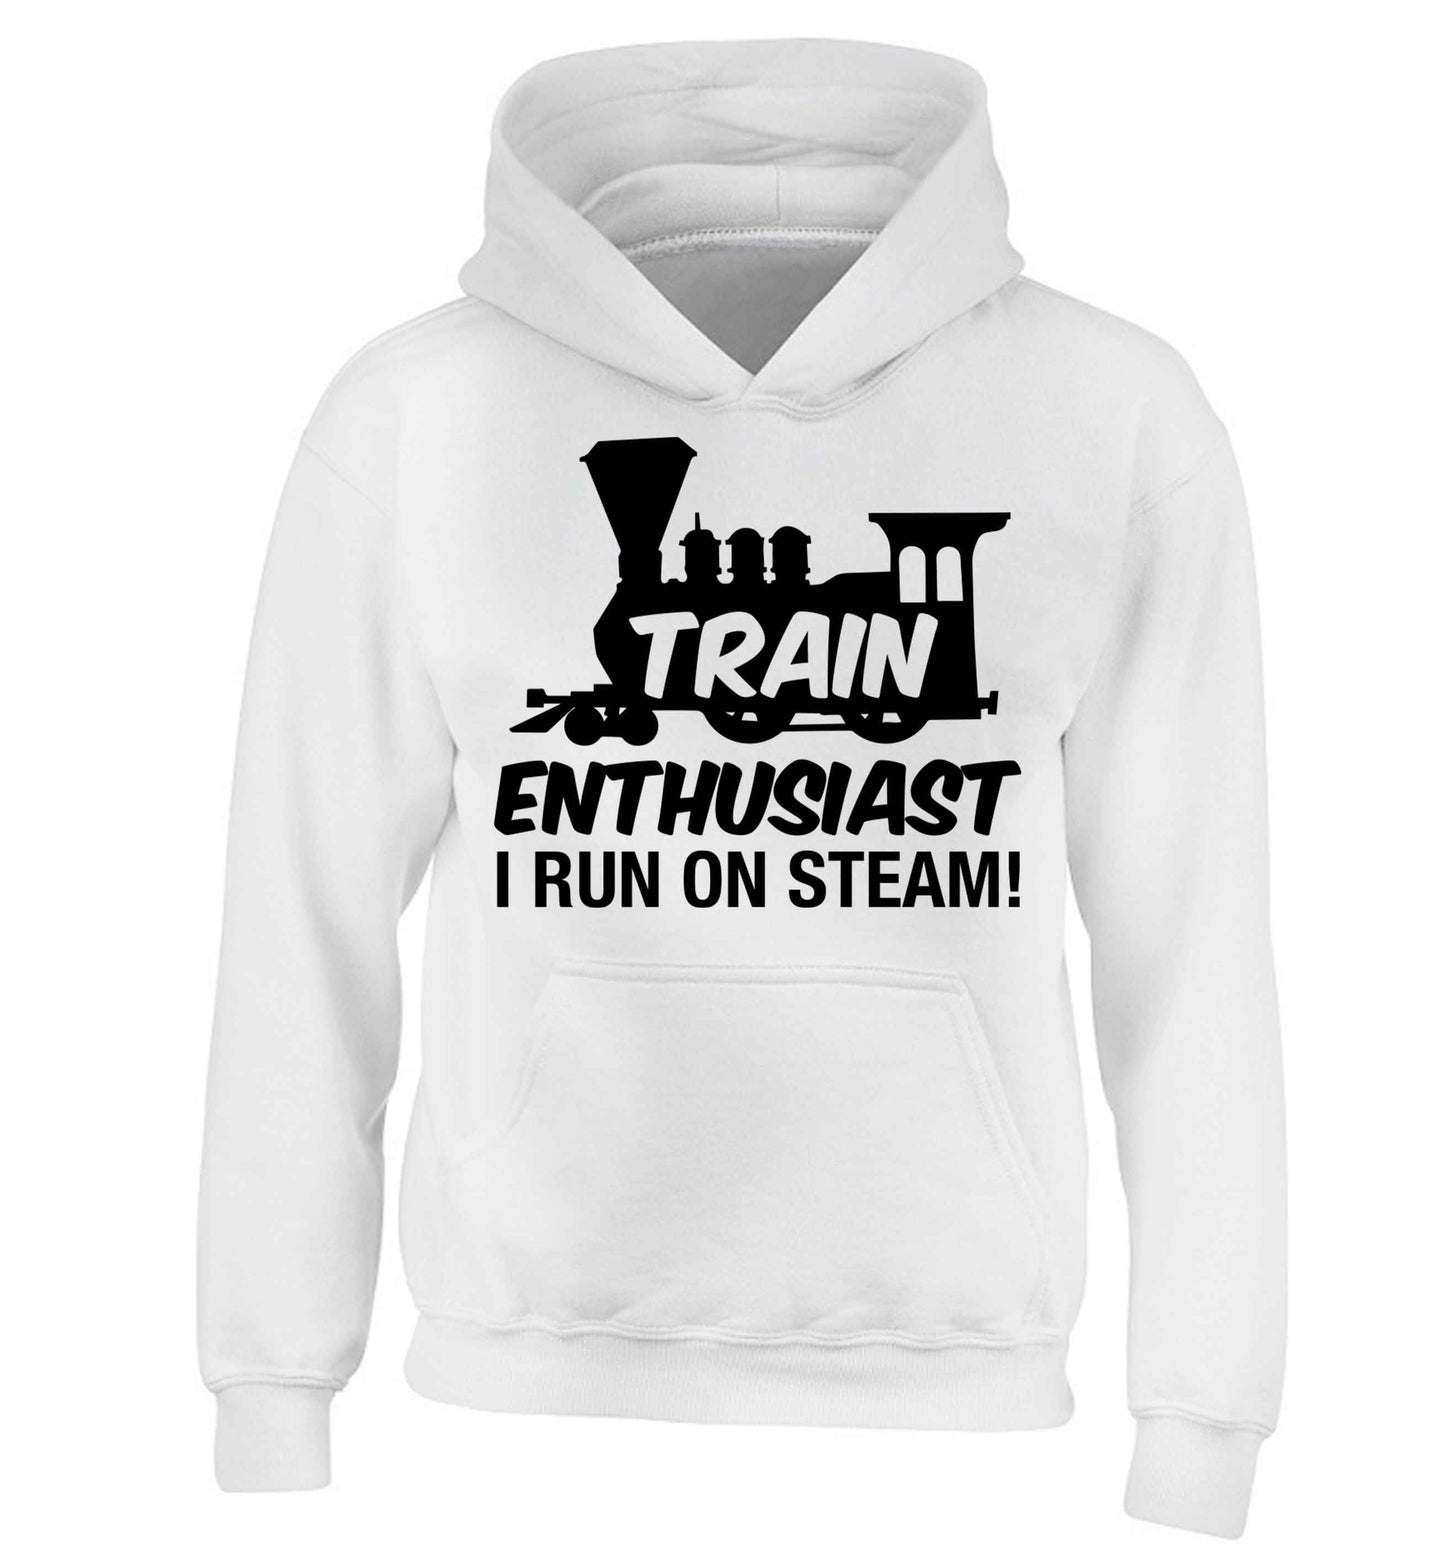 Train enthusiast I run on steam children's white hoodie 12-13 Years